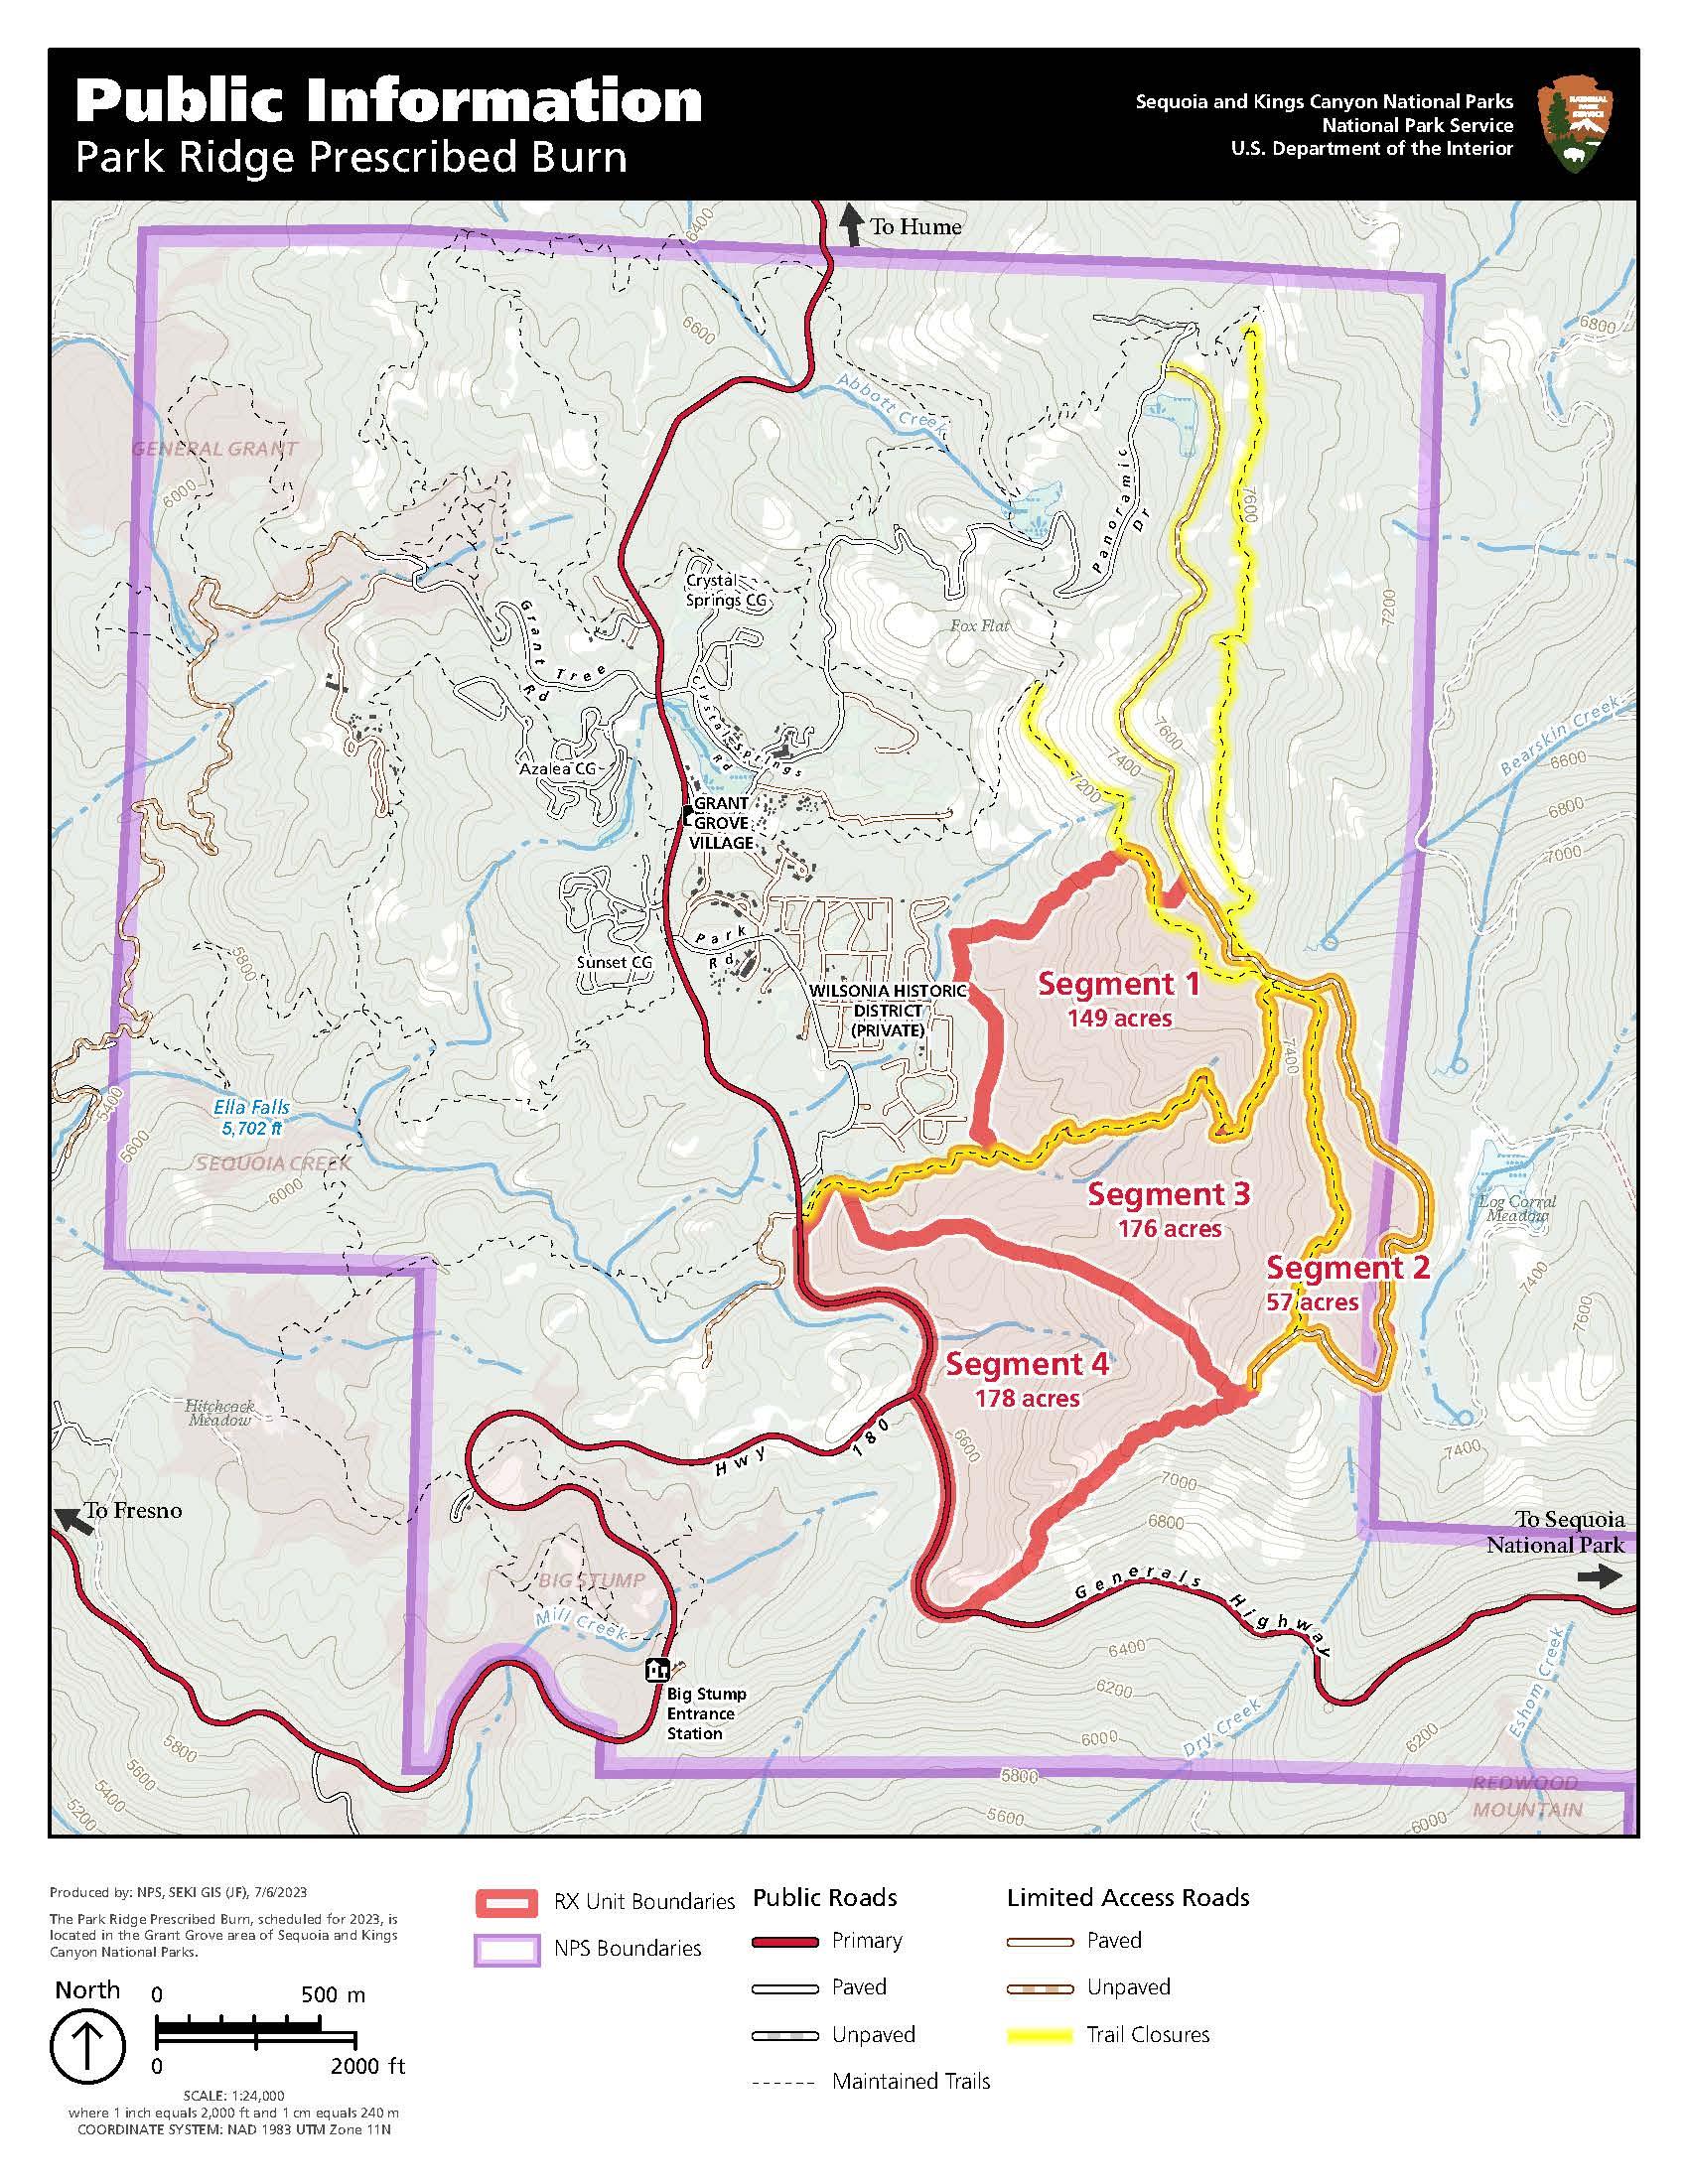 Public Information Map of the Park Ridge Prescribed Fire